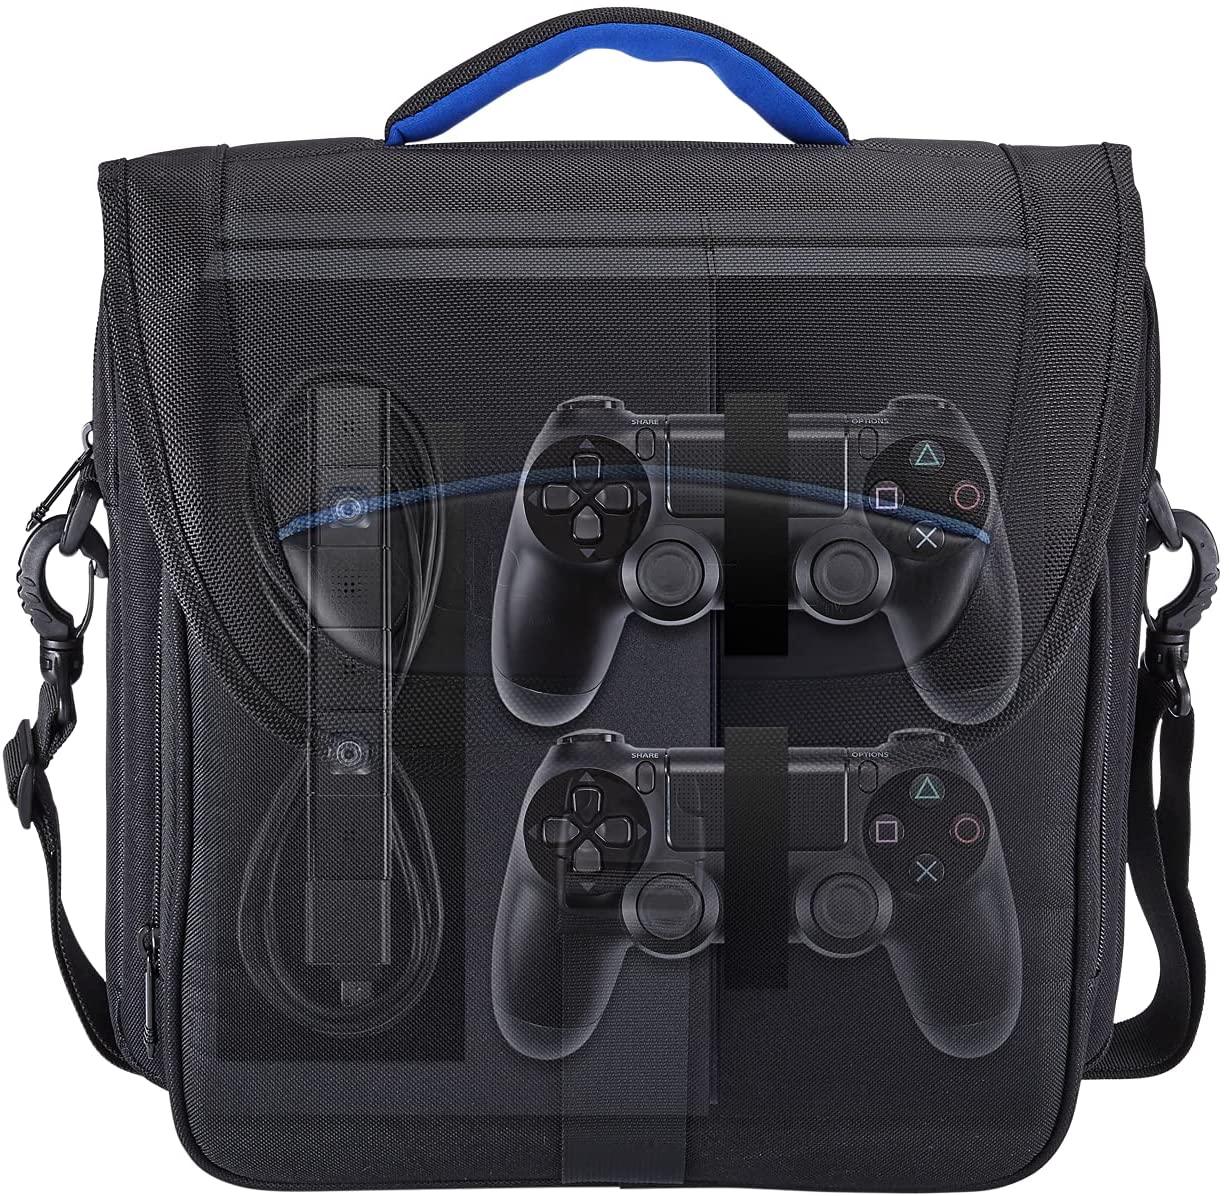 BigBen Interactive Officially Licensed PlayStation 4 Travel Bag V2 - GameStore.mt | Powered by Flutisat